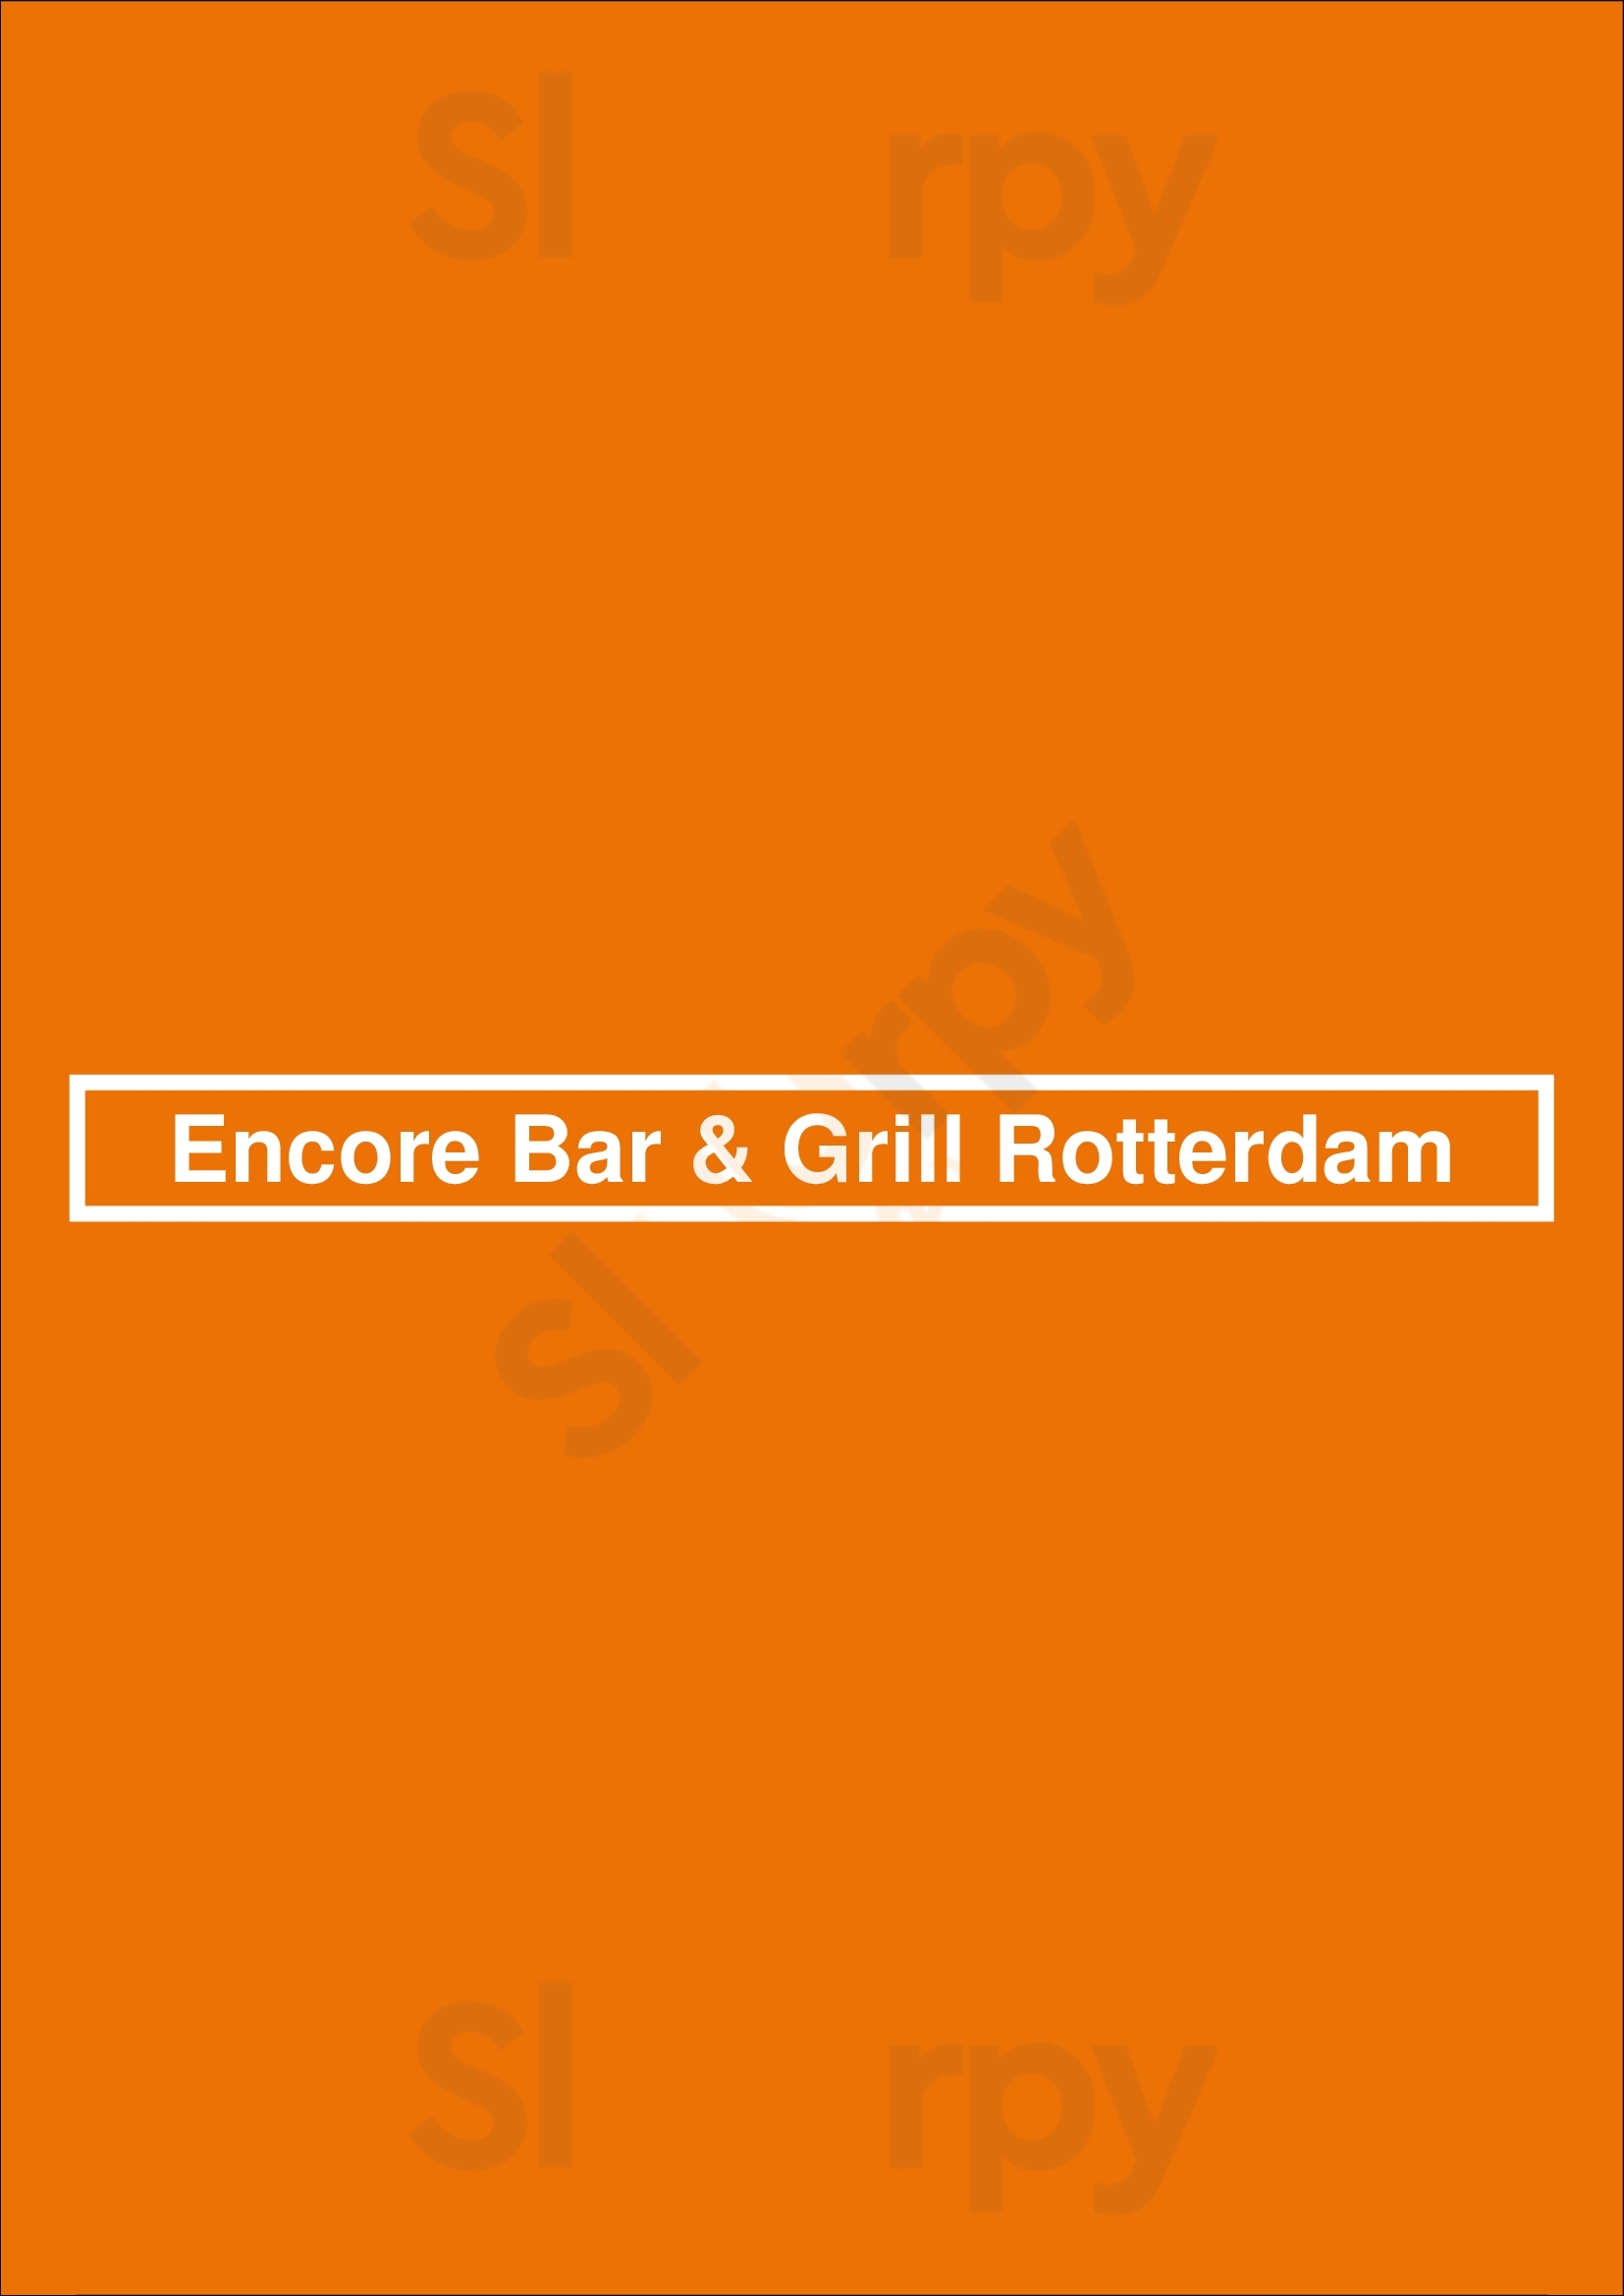 Encore Bar & Grill Rotterdam Rotterdam Menu - 1